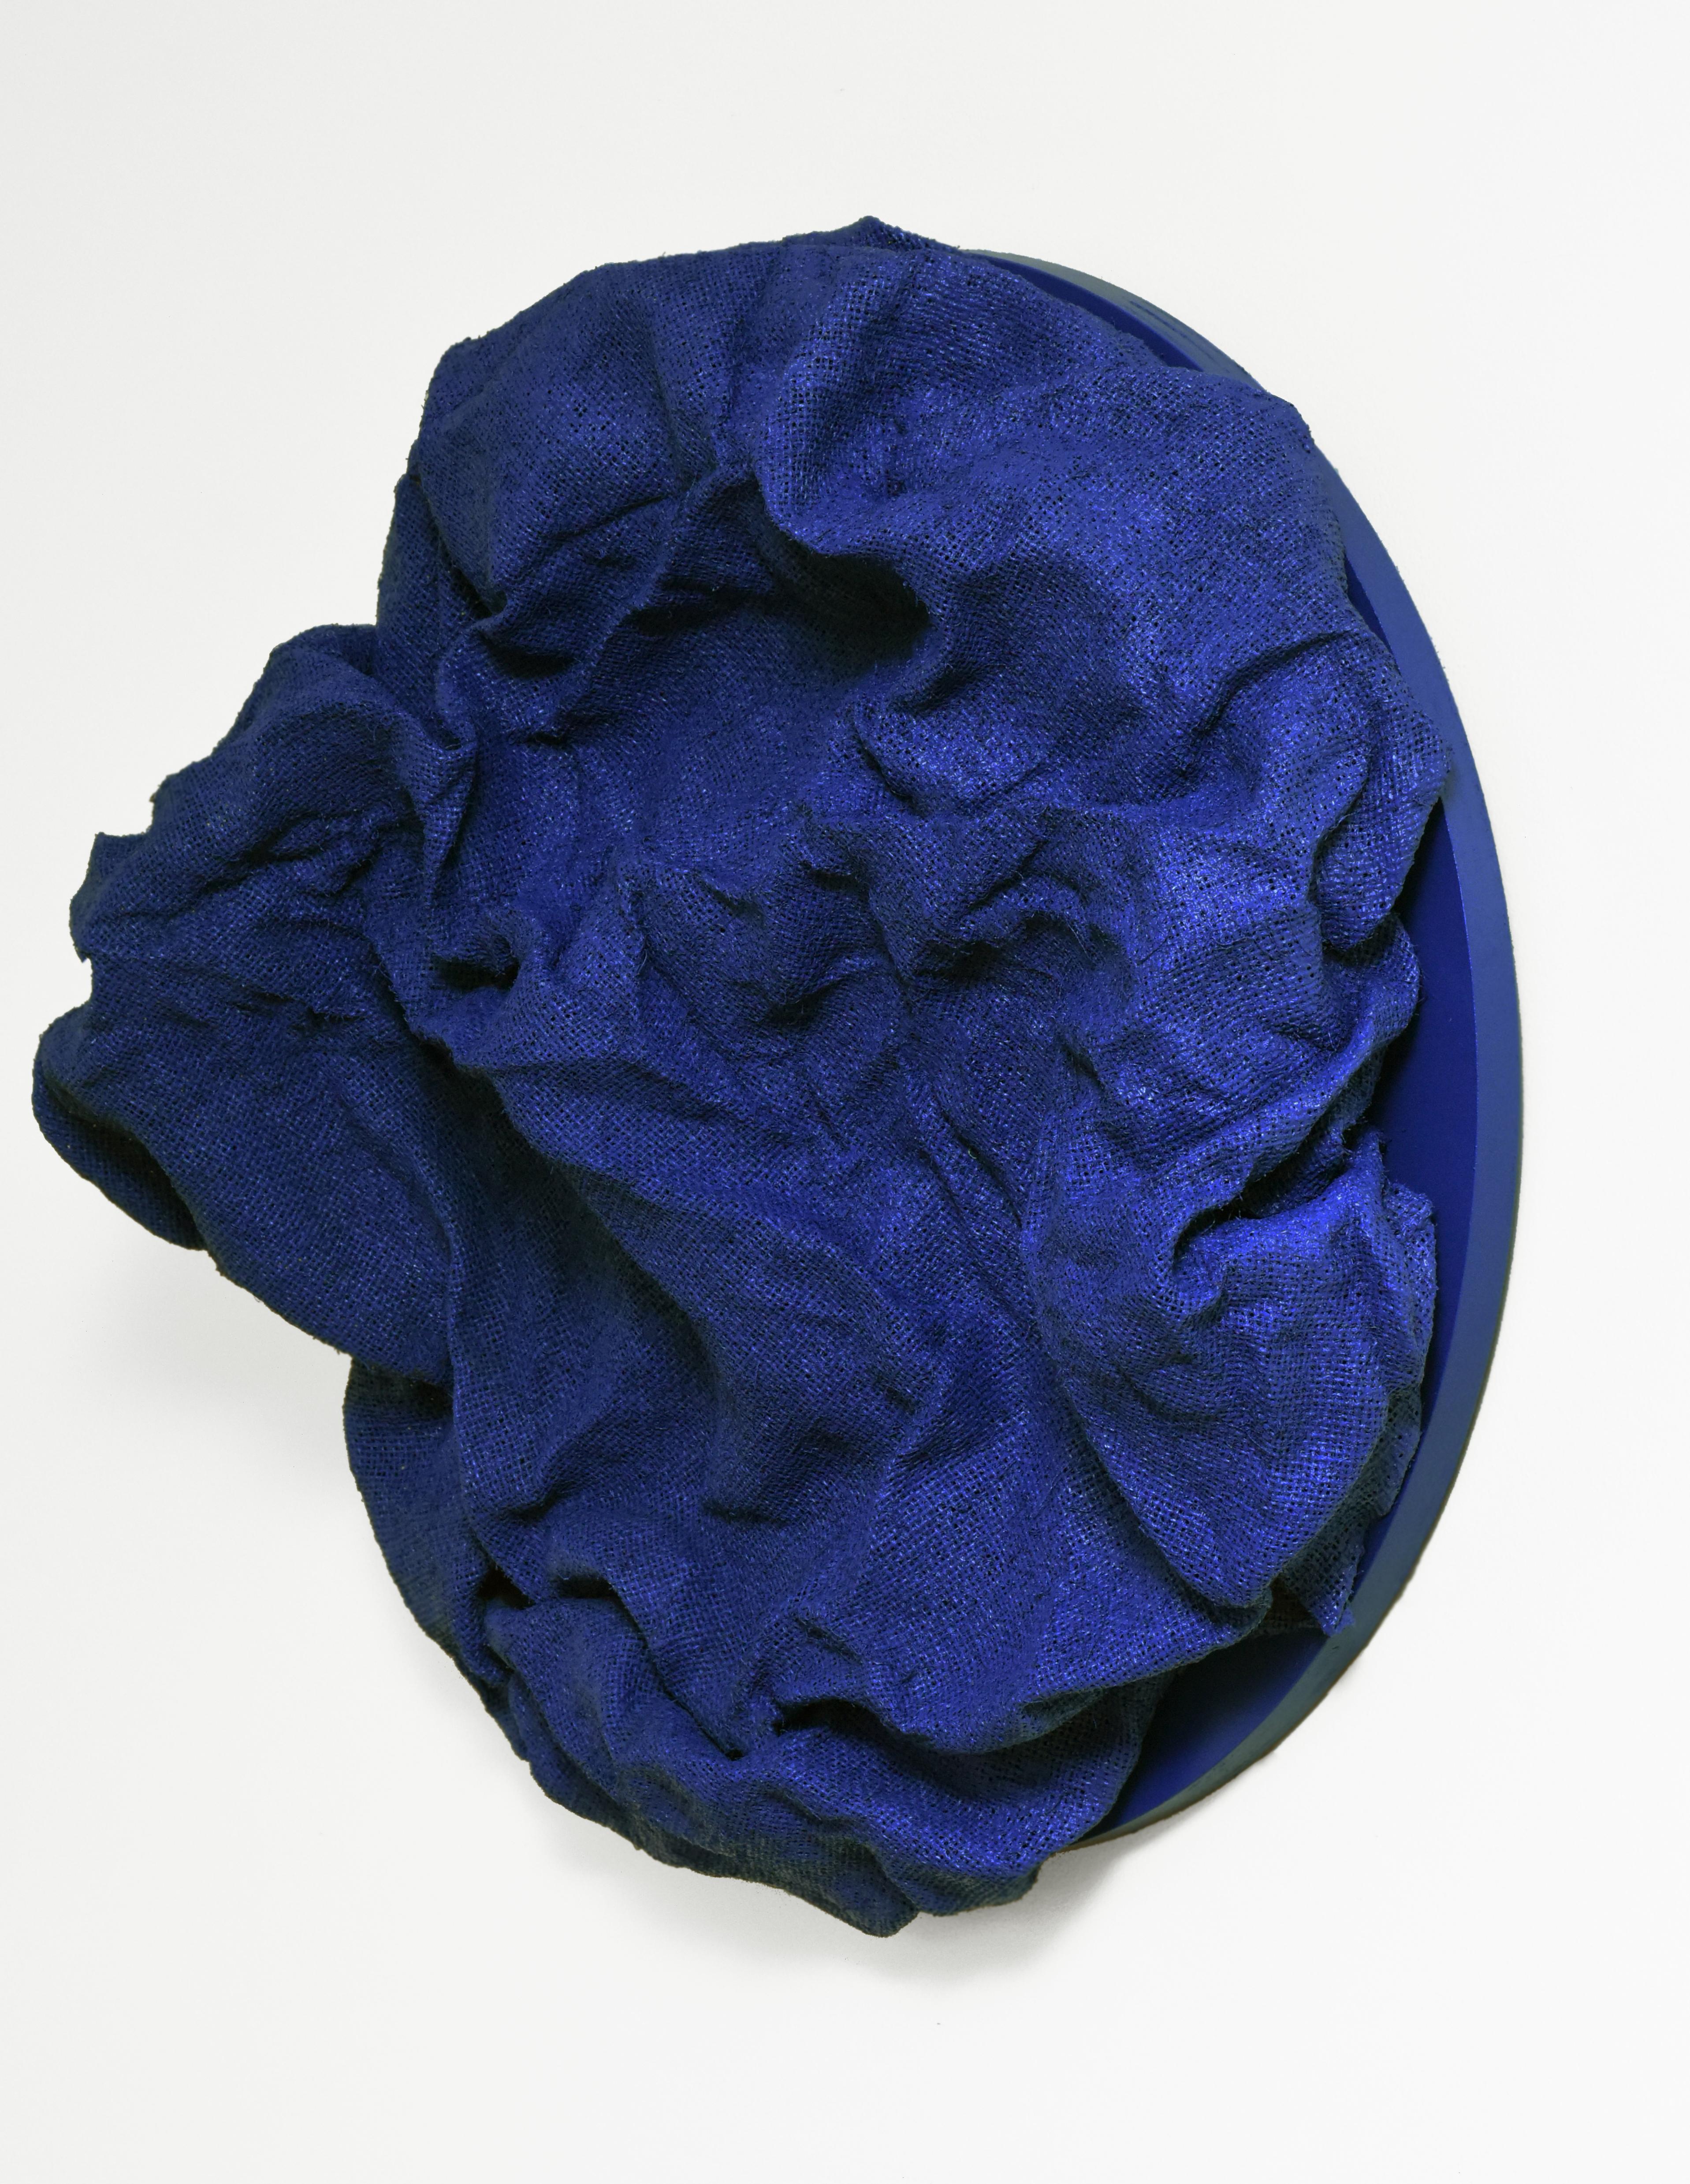 Iris Blue Folds (navy blue, dark blue, hard fabric, contemporary design, textile - Sculpture by Chloe Hedden